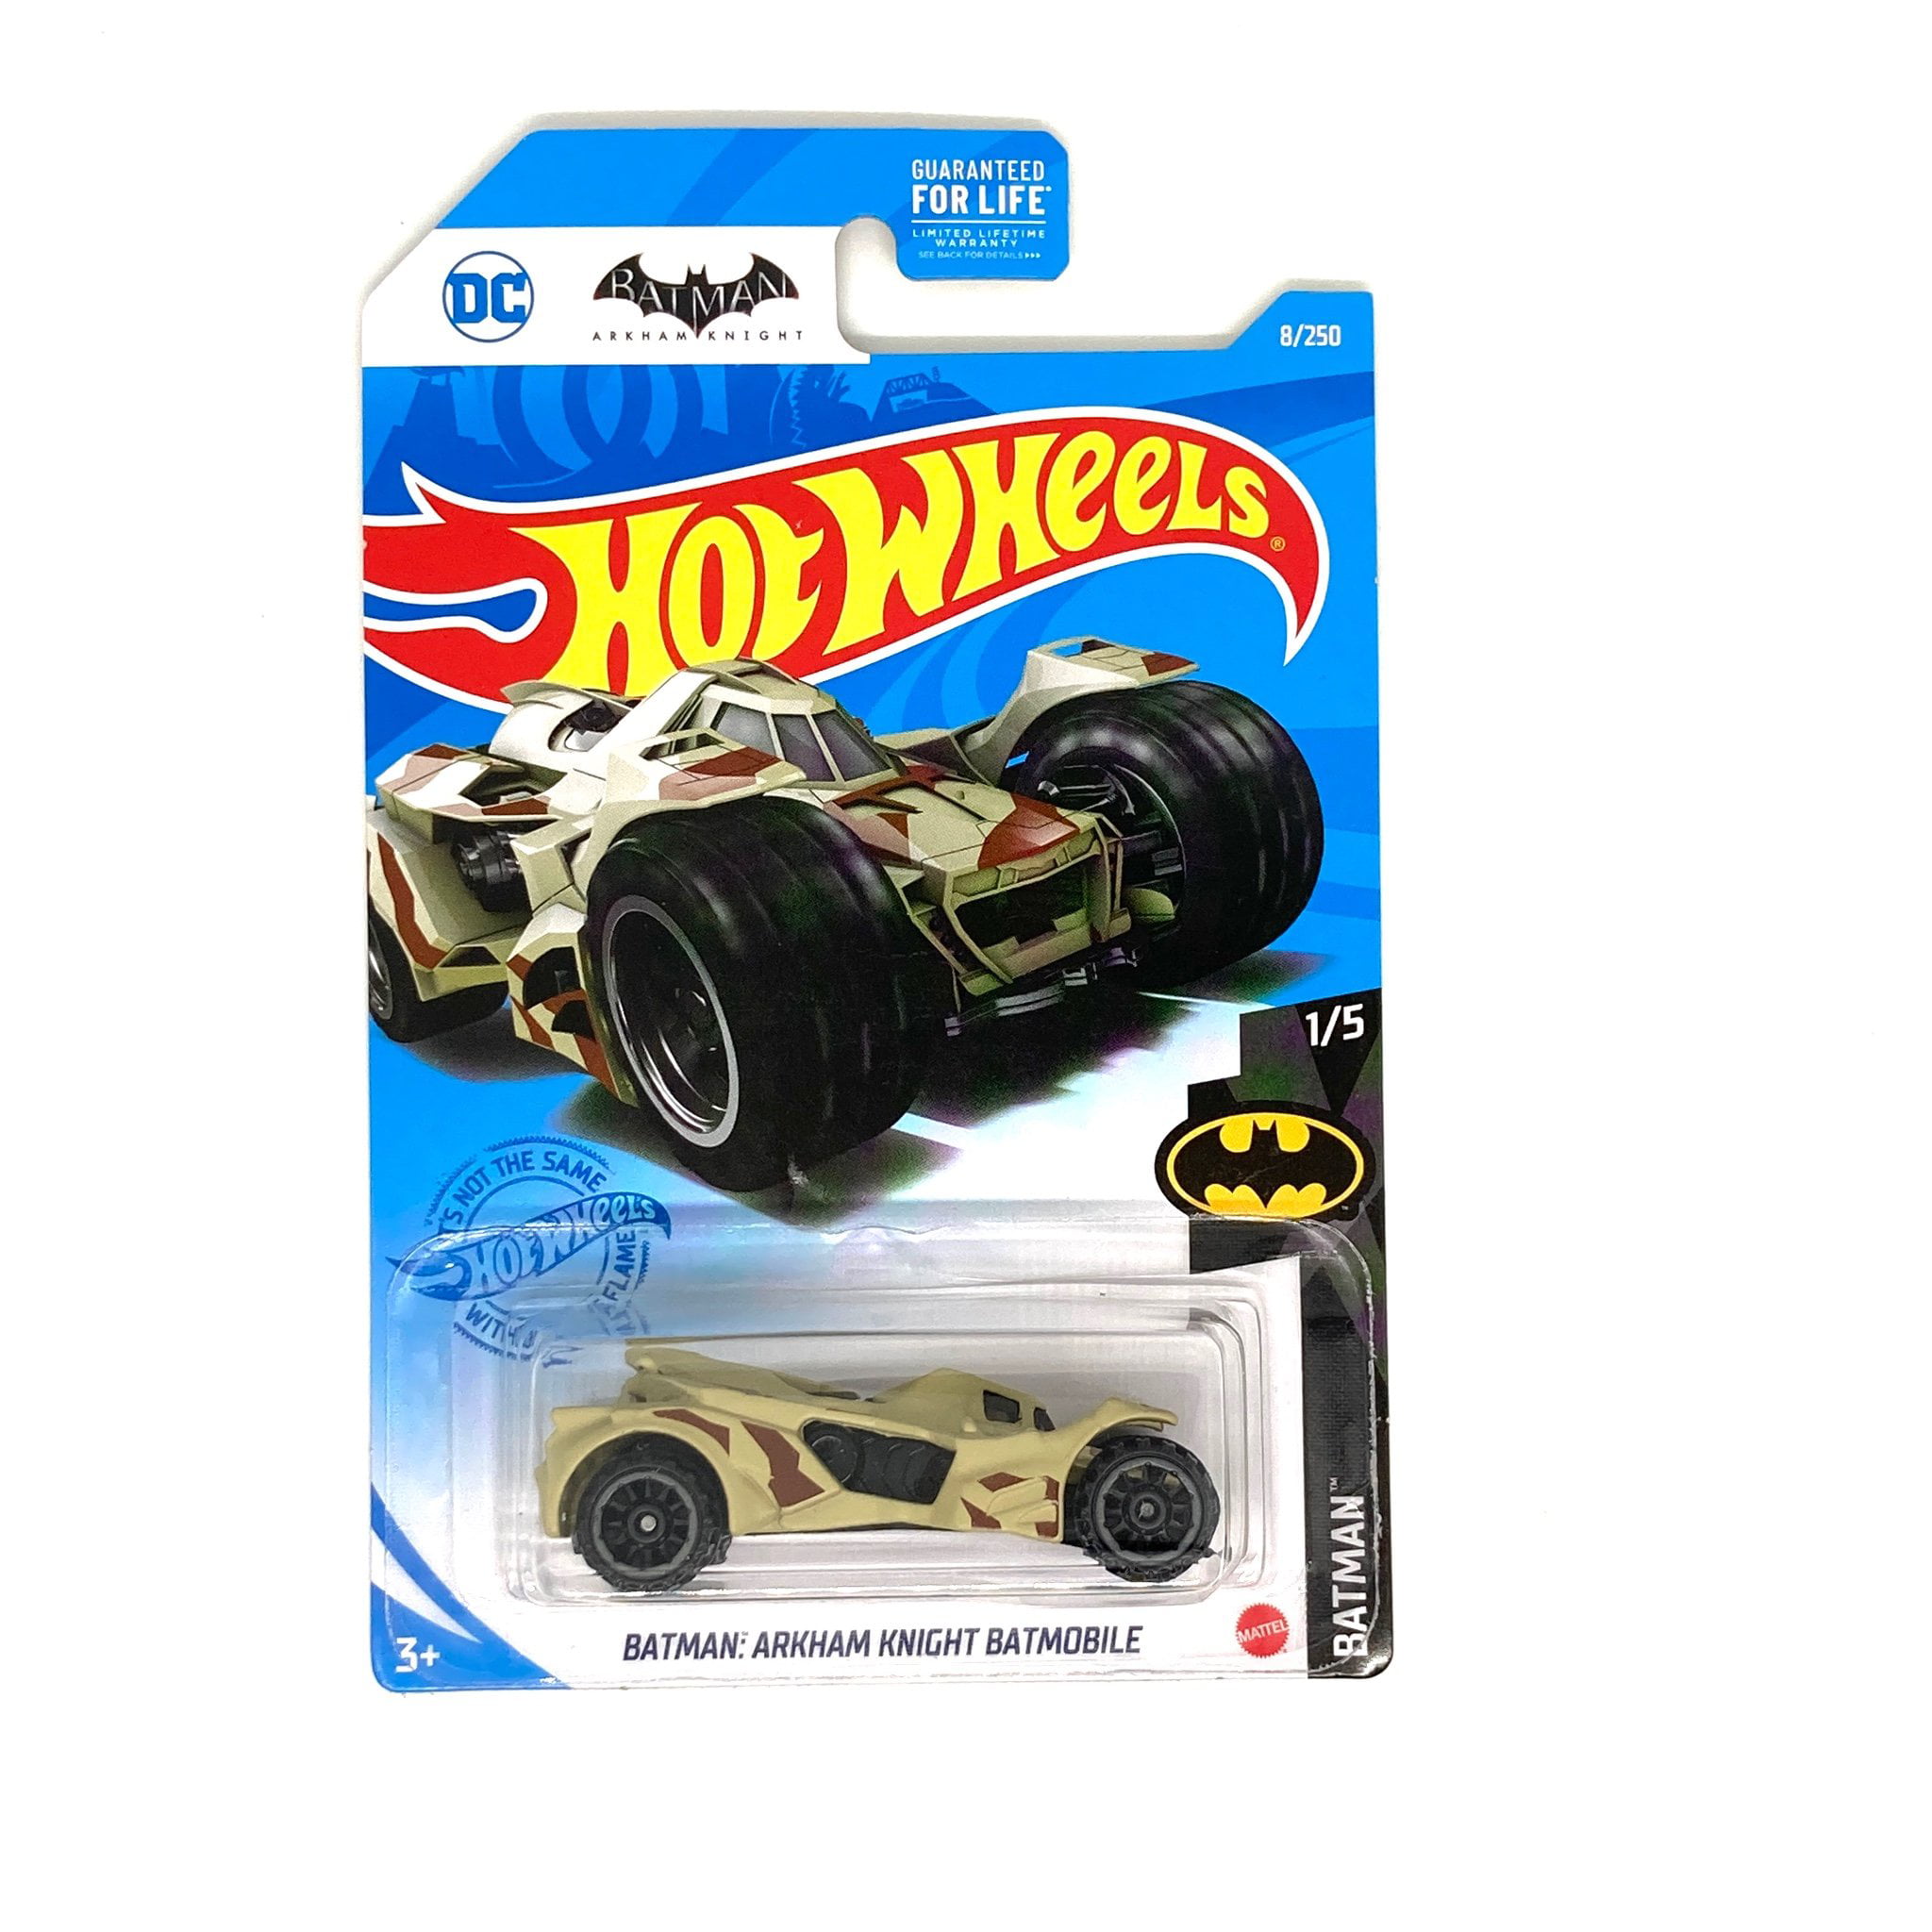 & Blue Ba Details about   2021 Hot Wheels Batman Lot of 4 Cars including New Camo Arkham Knight 